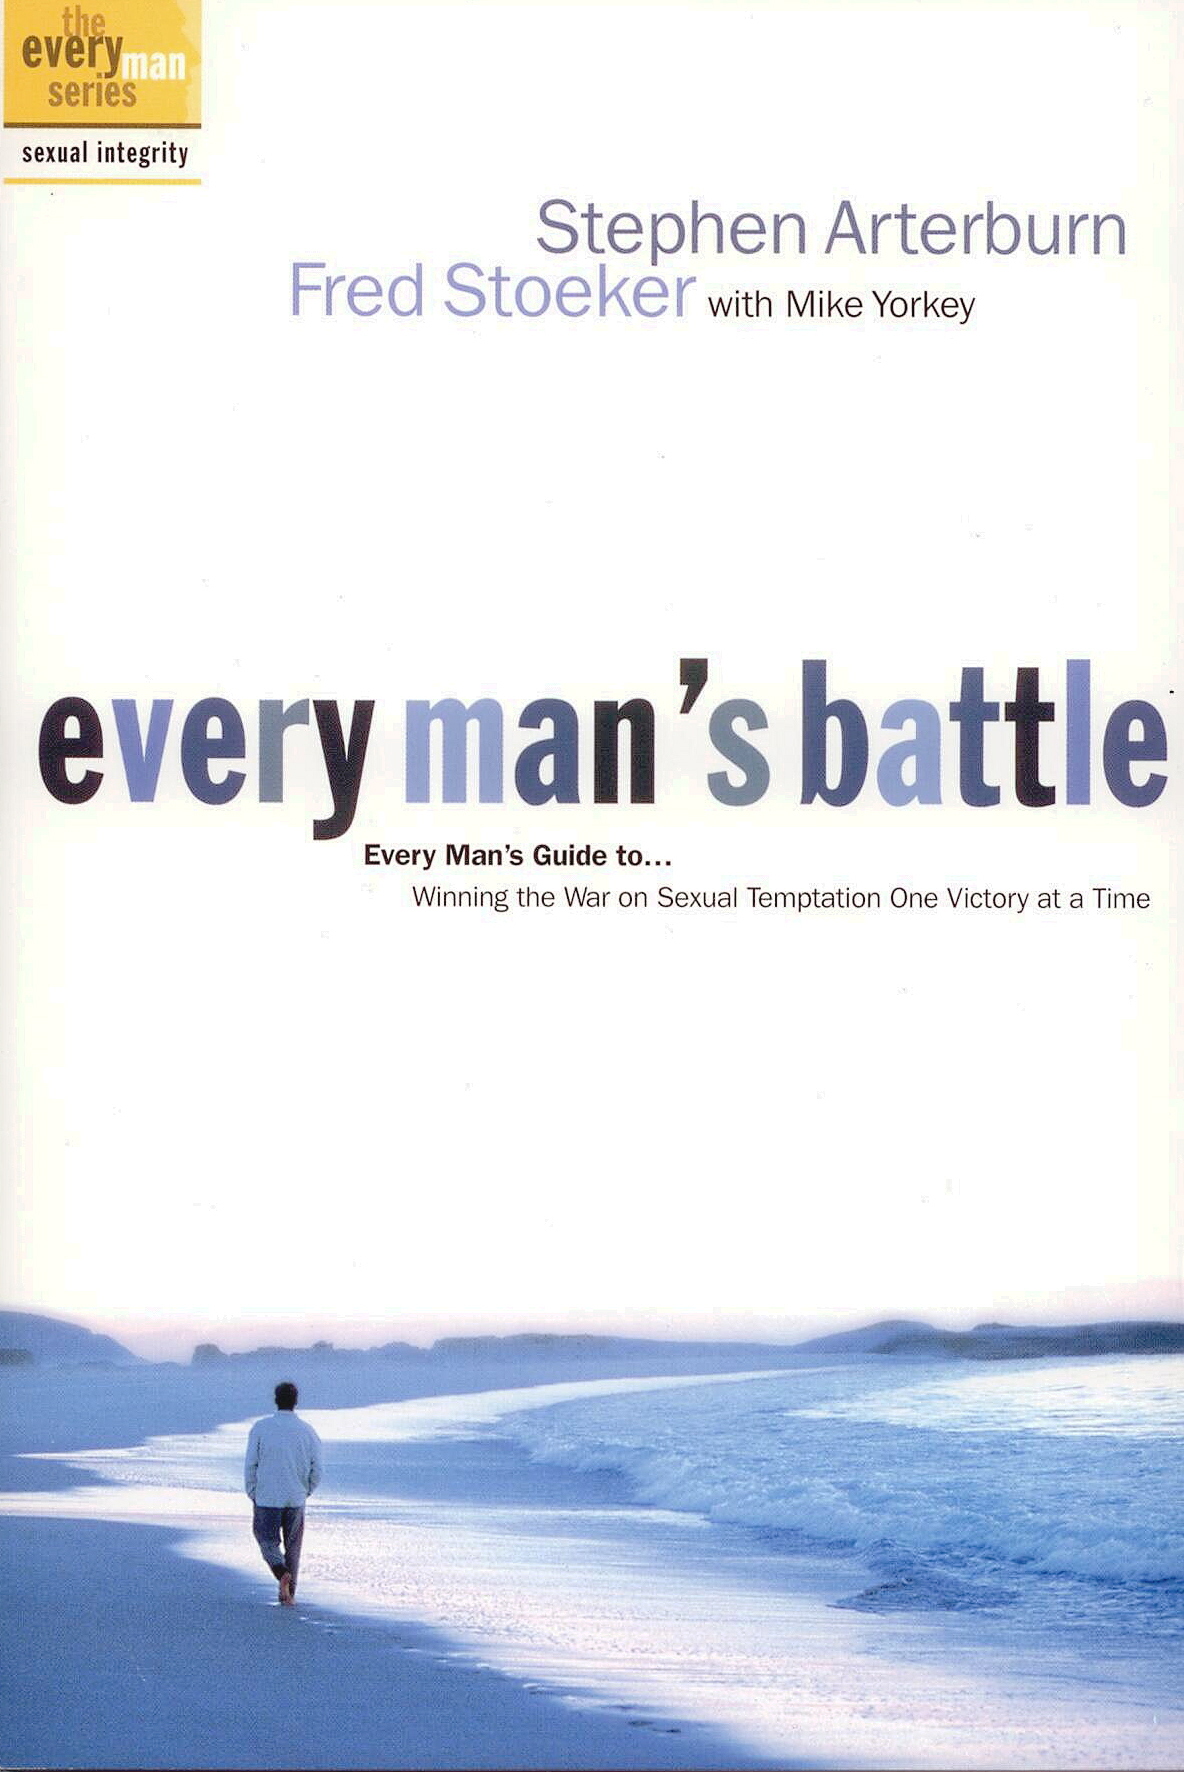 Every Man' s Battle by Stephen Arterburn